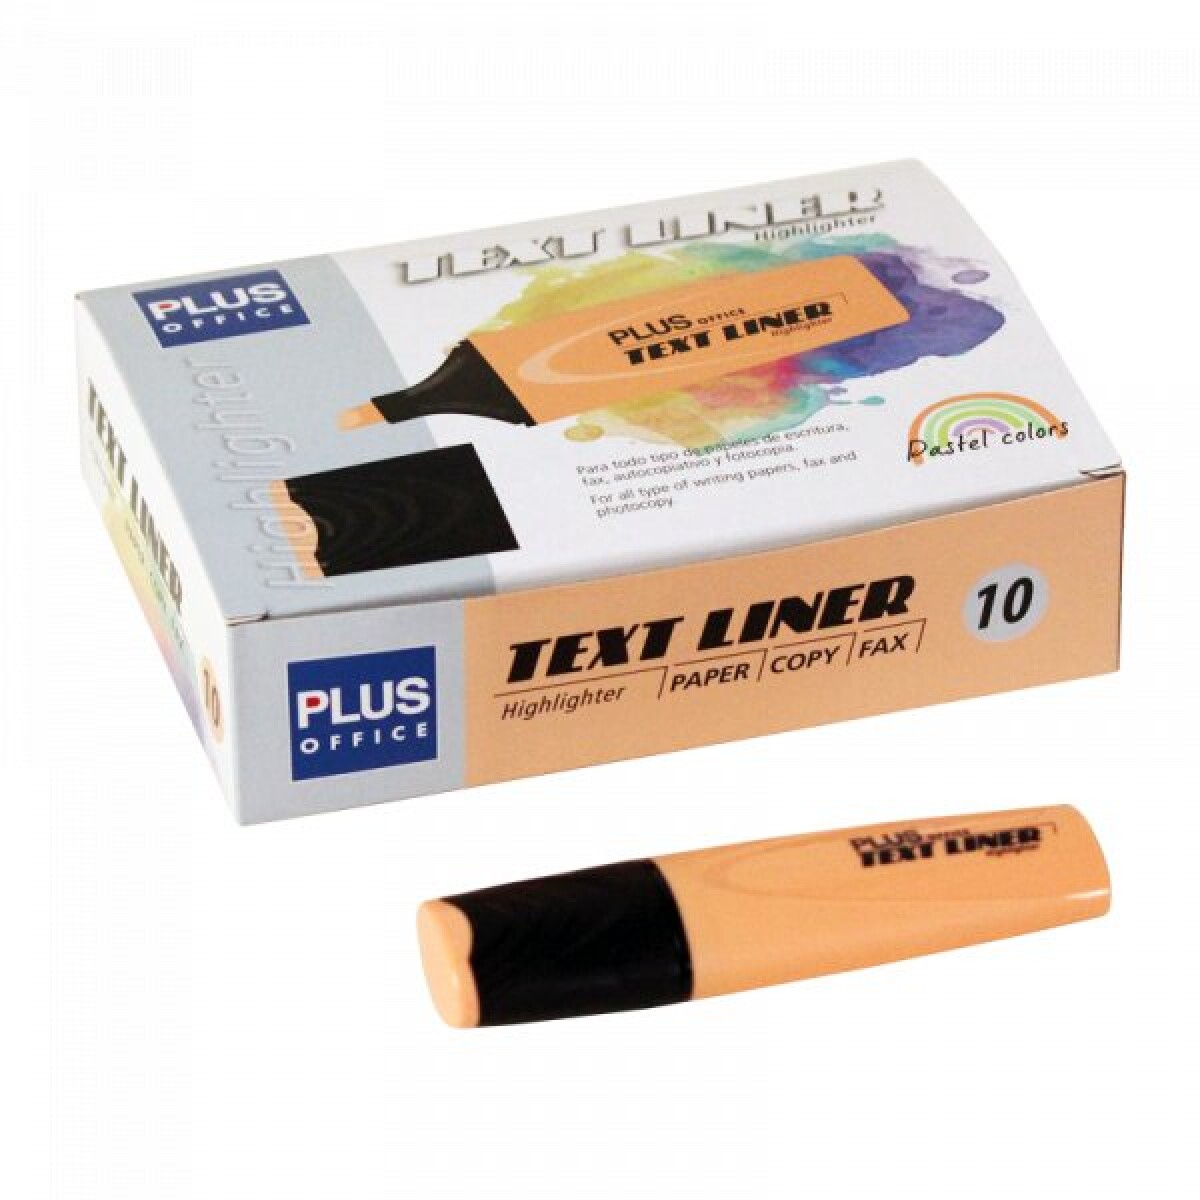 Resaltador Pastel Textliner Plus Office x10 - Naranja Pastel 